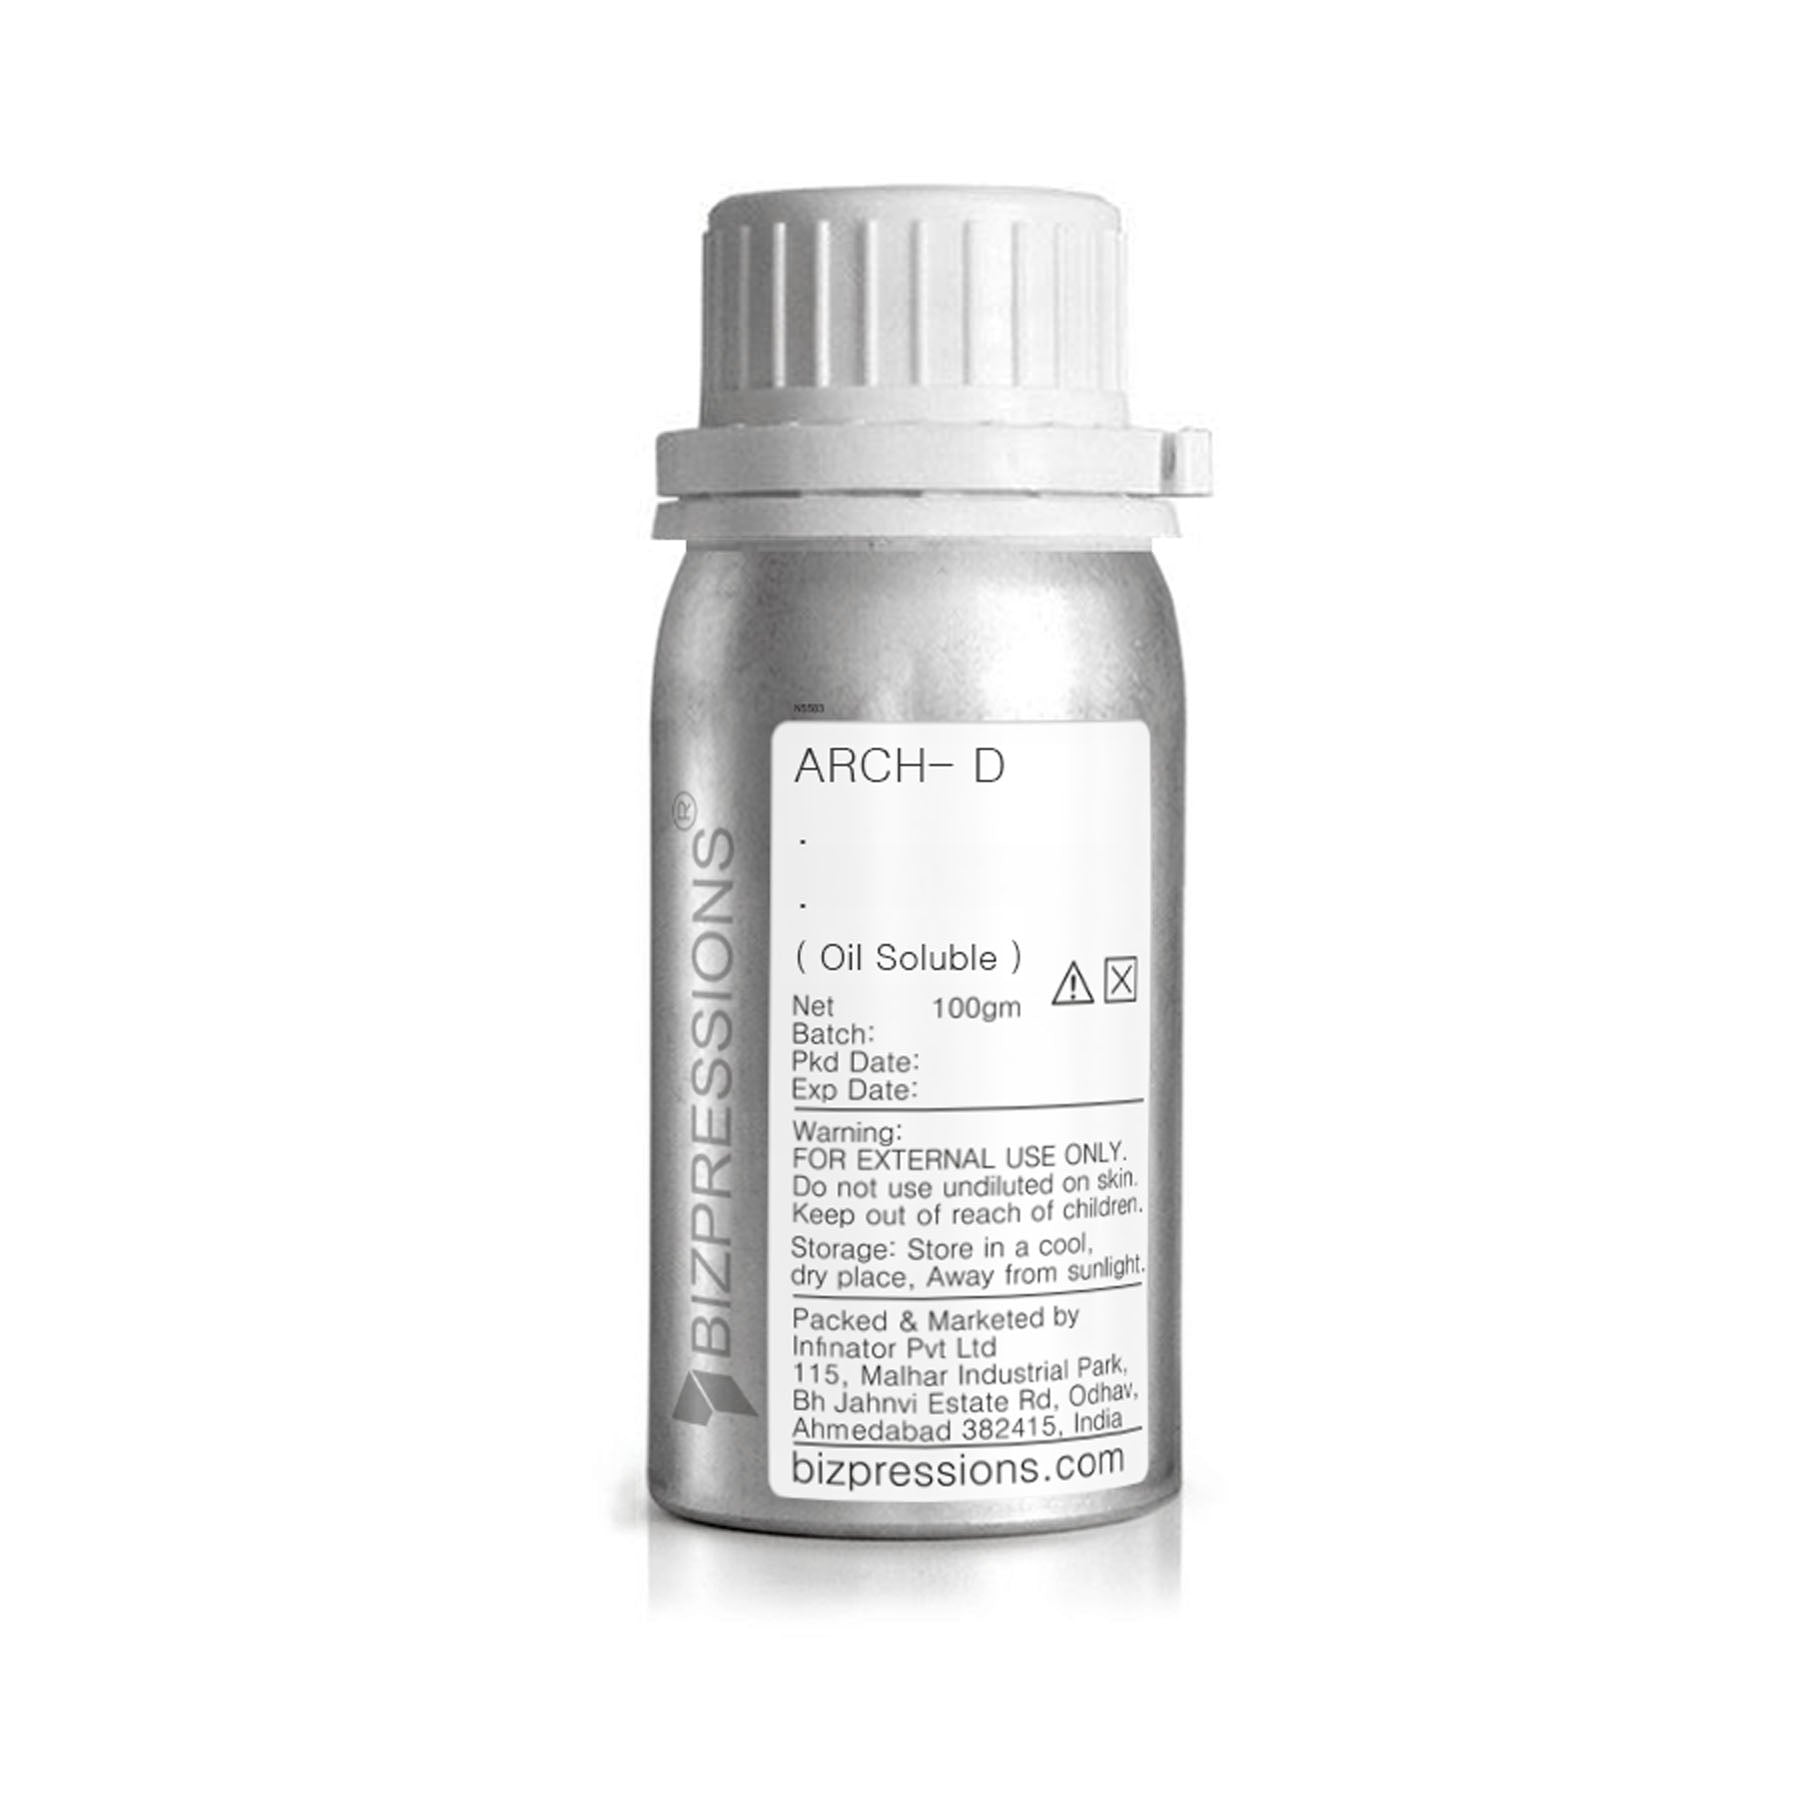 ARCH- D - Fragrance ( Oil Soluble ) - 100 gm